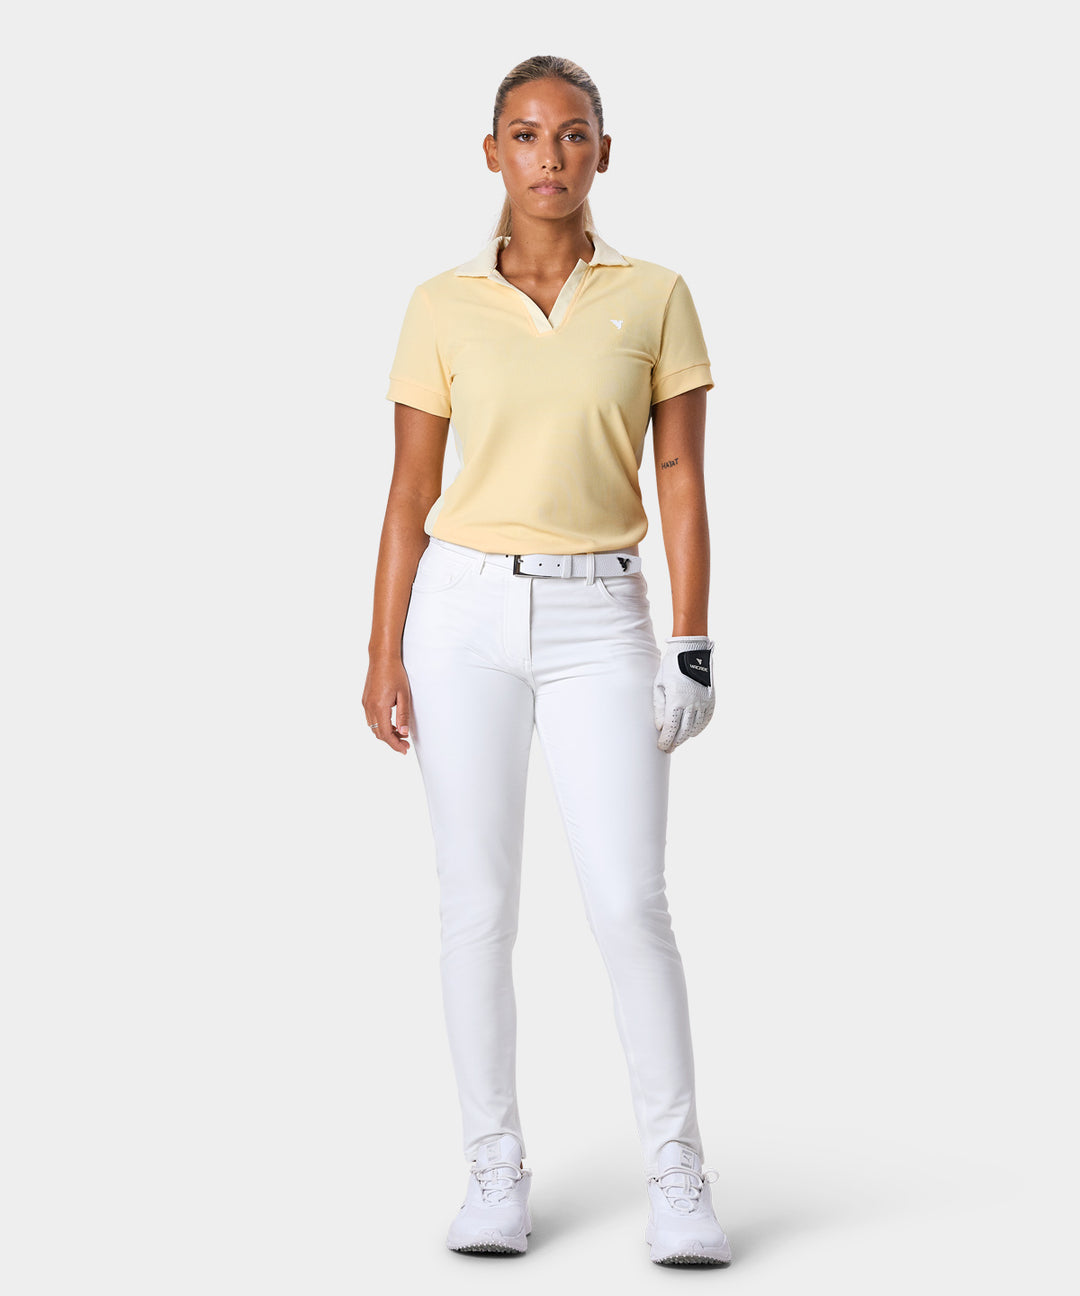 Tori Yellow Polo Shirt Macade Golf